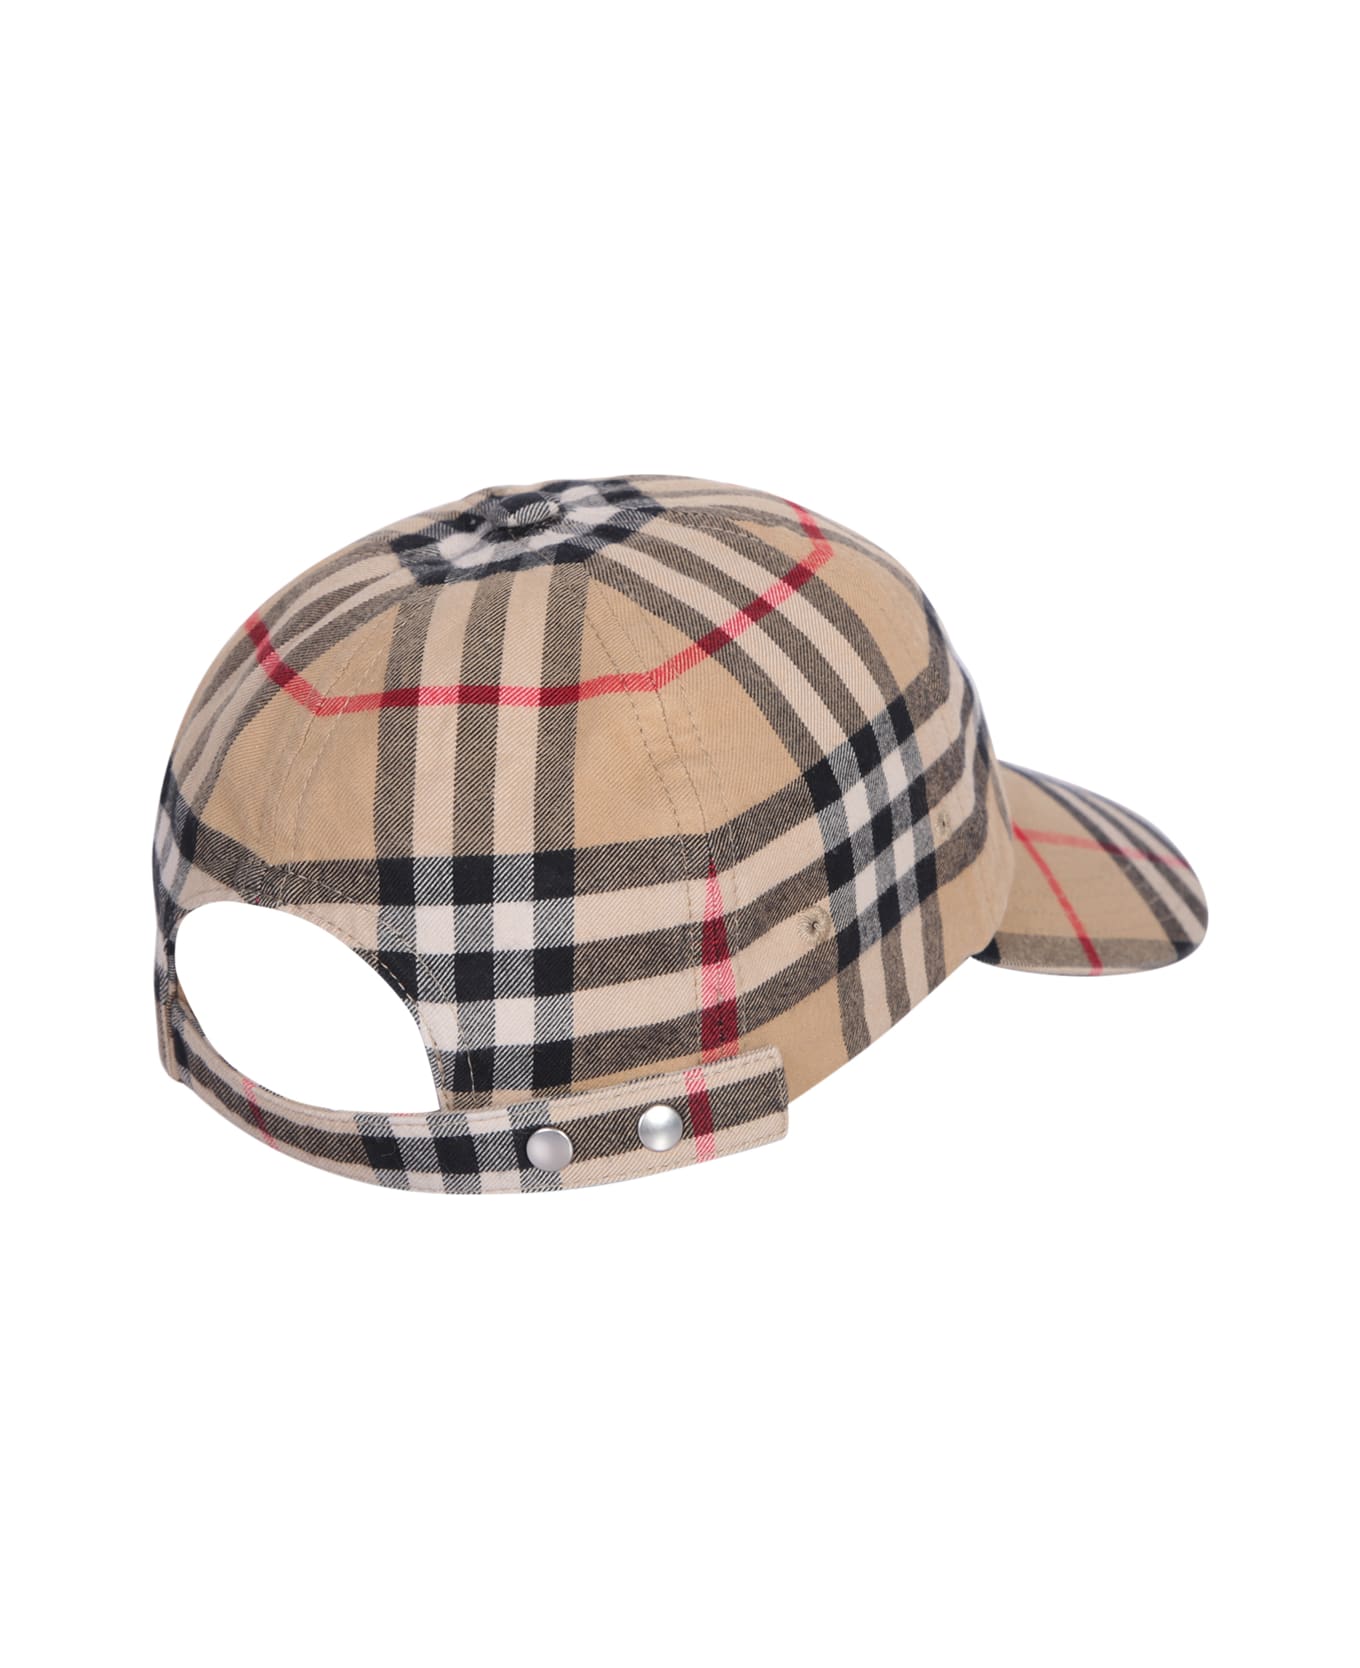 Burberry Check Cap - Archive Beige 帽子